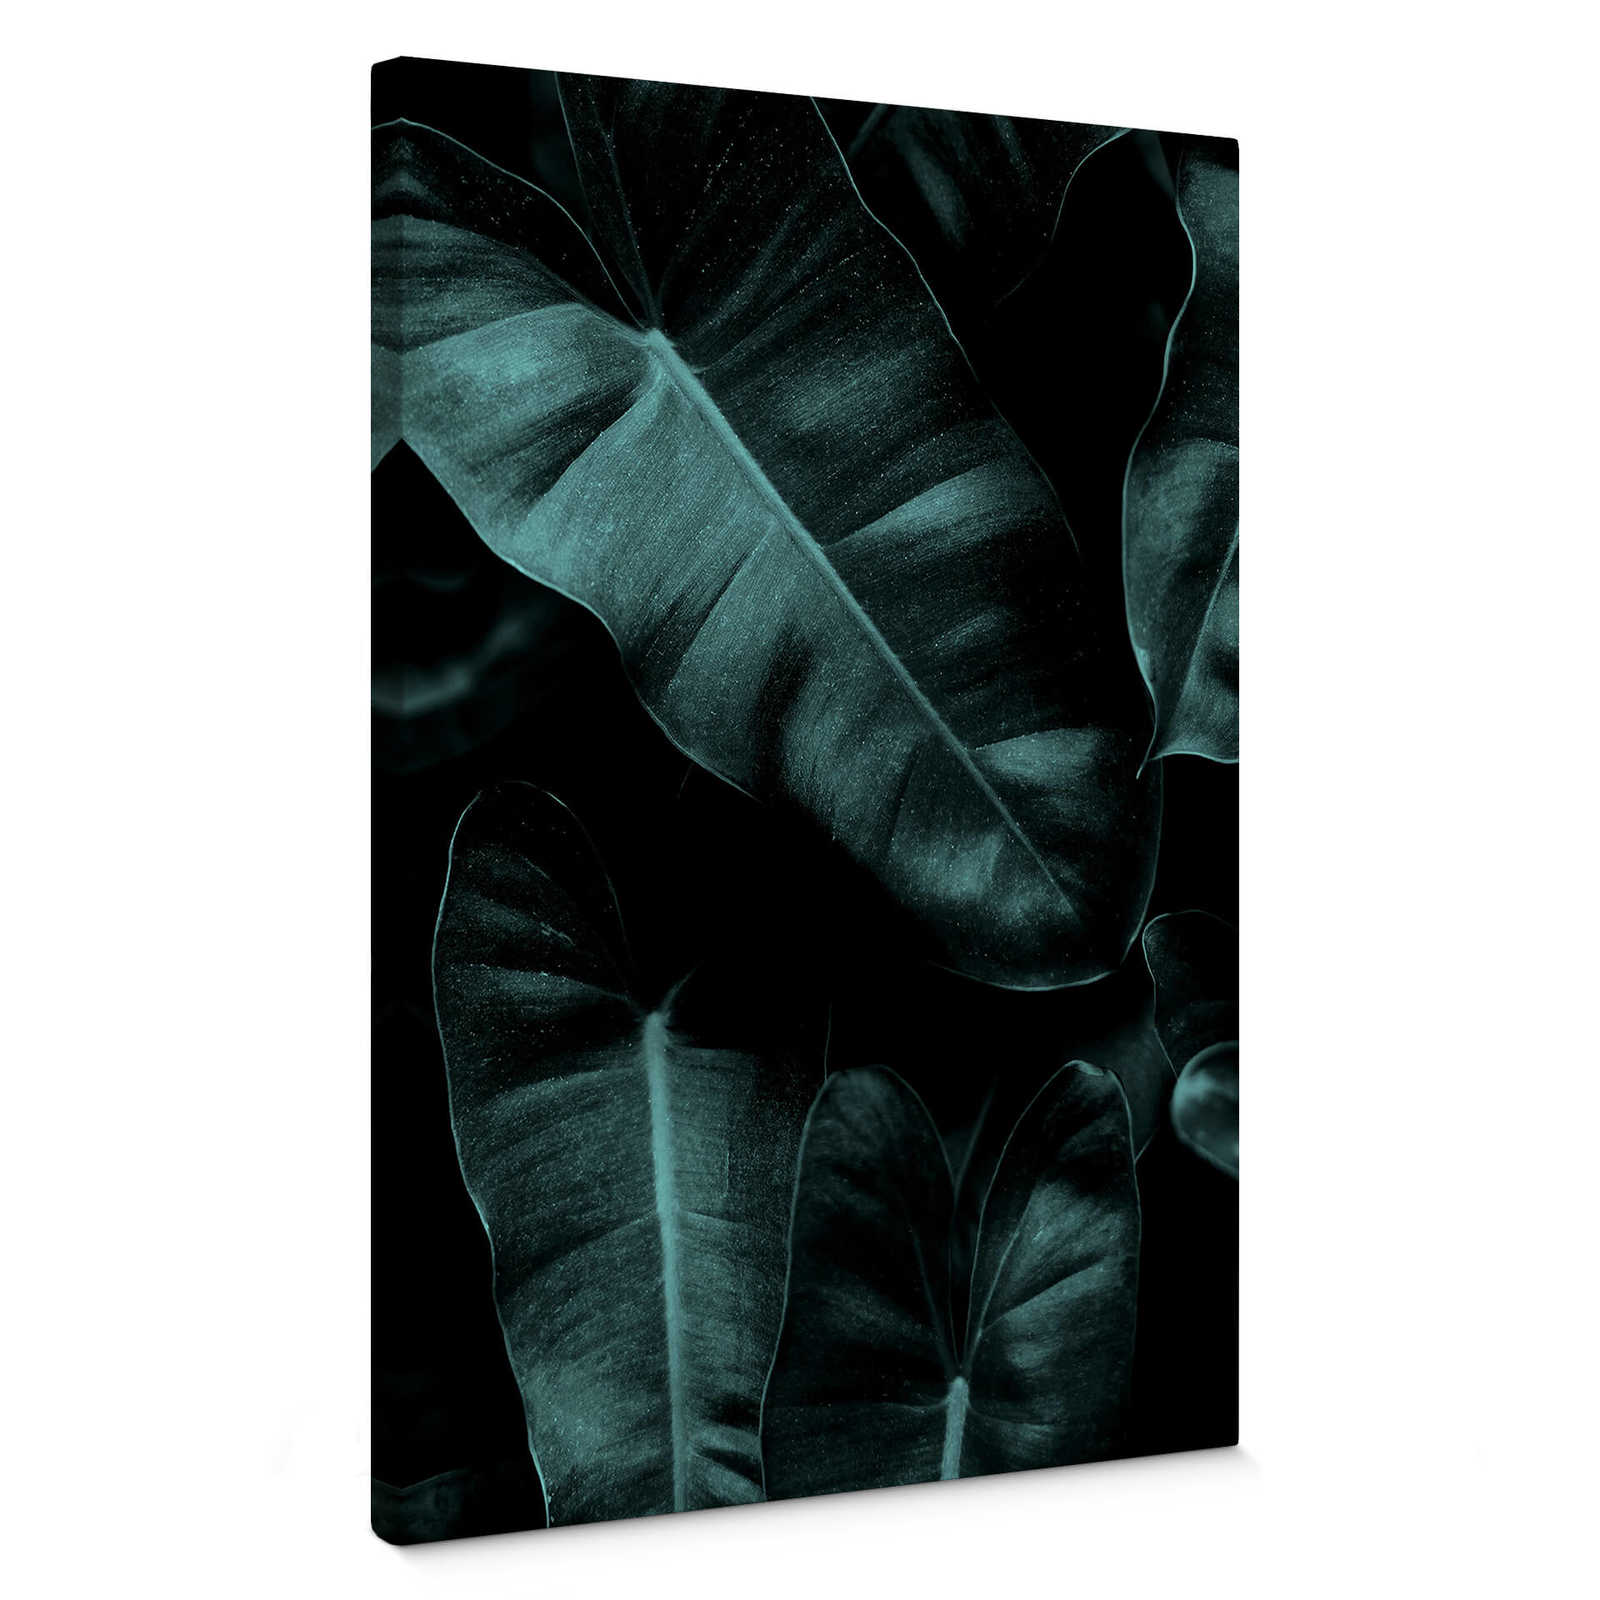         Kubstika Leinwandbild Blätter im Dschungeldesign – 0,50 m x 0,70 m
    